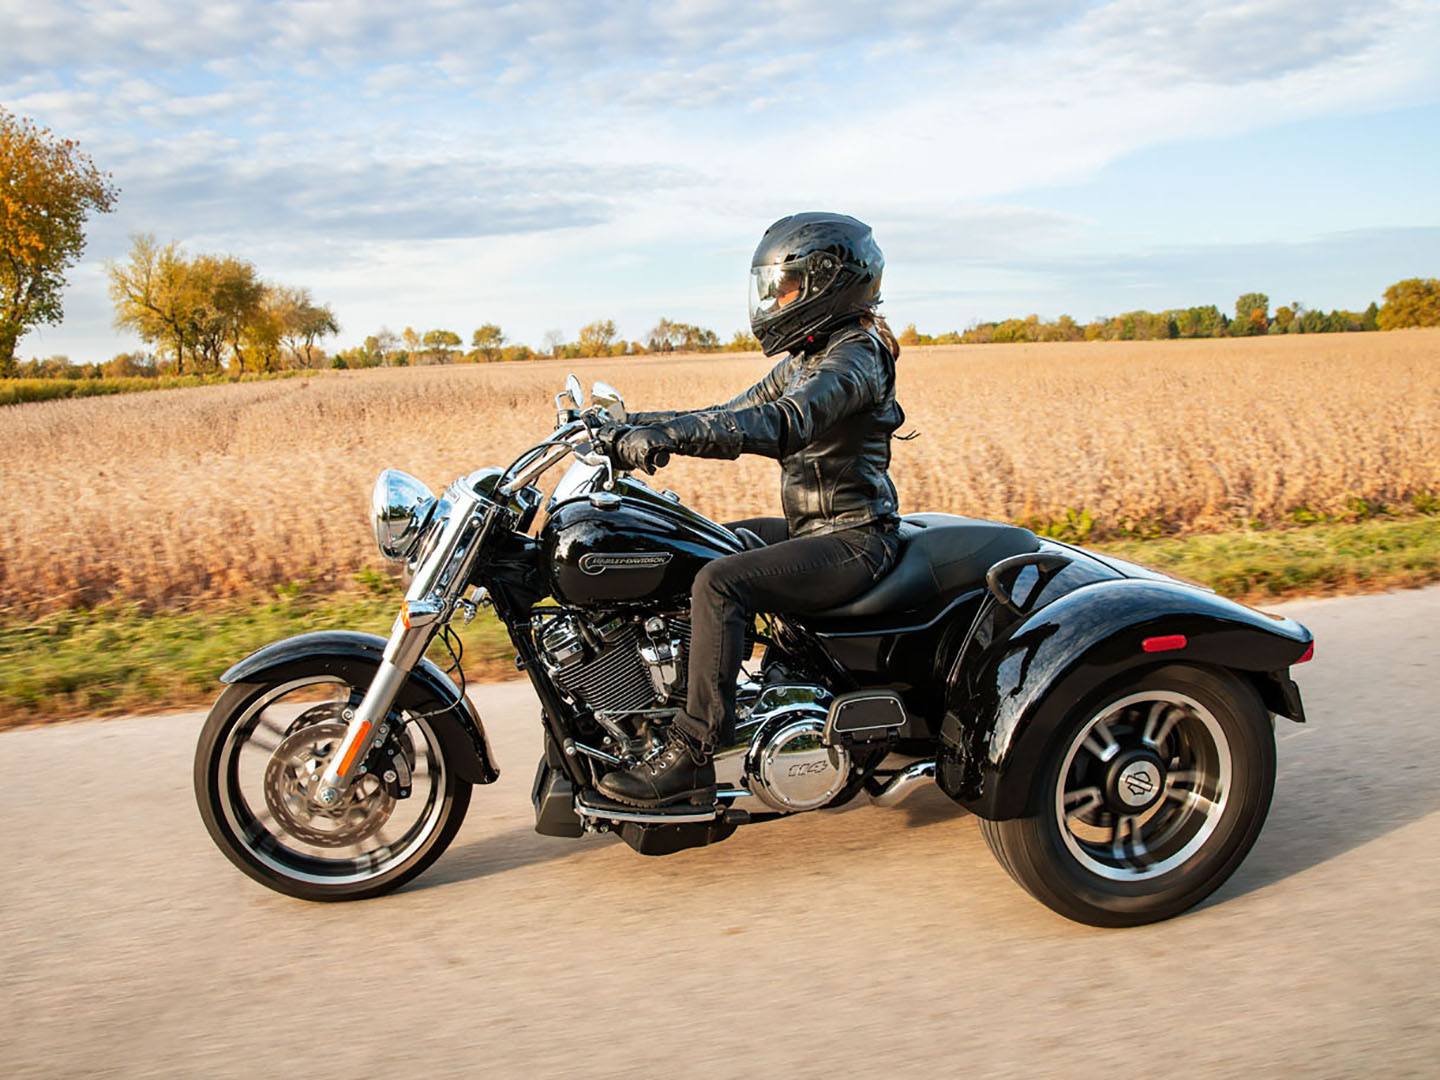 2021 Harley-Davidson Freewheeler® in Mentor, Ohio - Photo 8